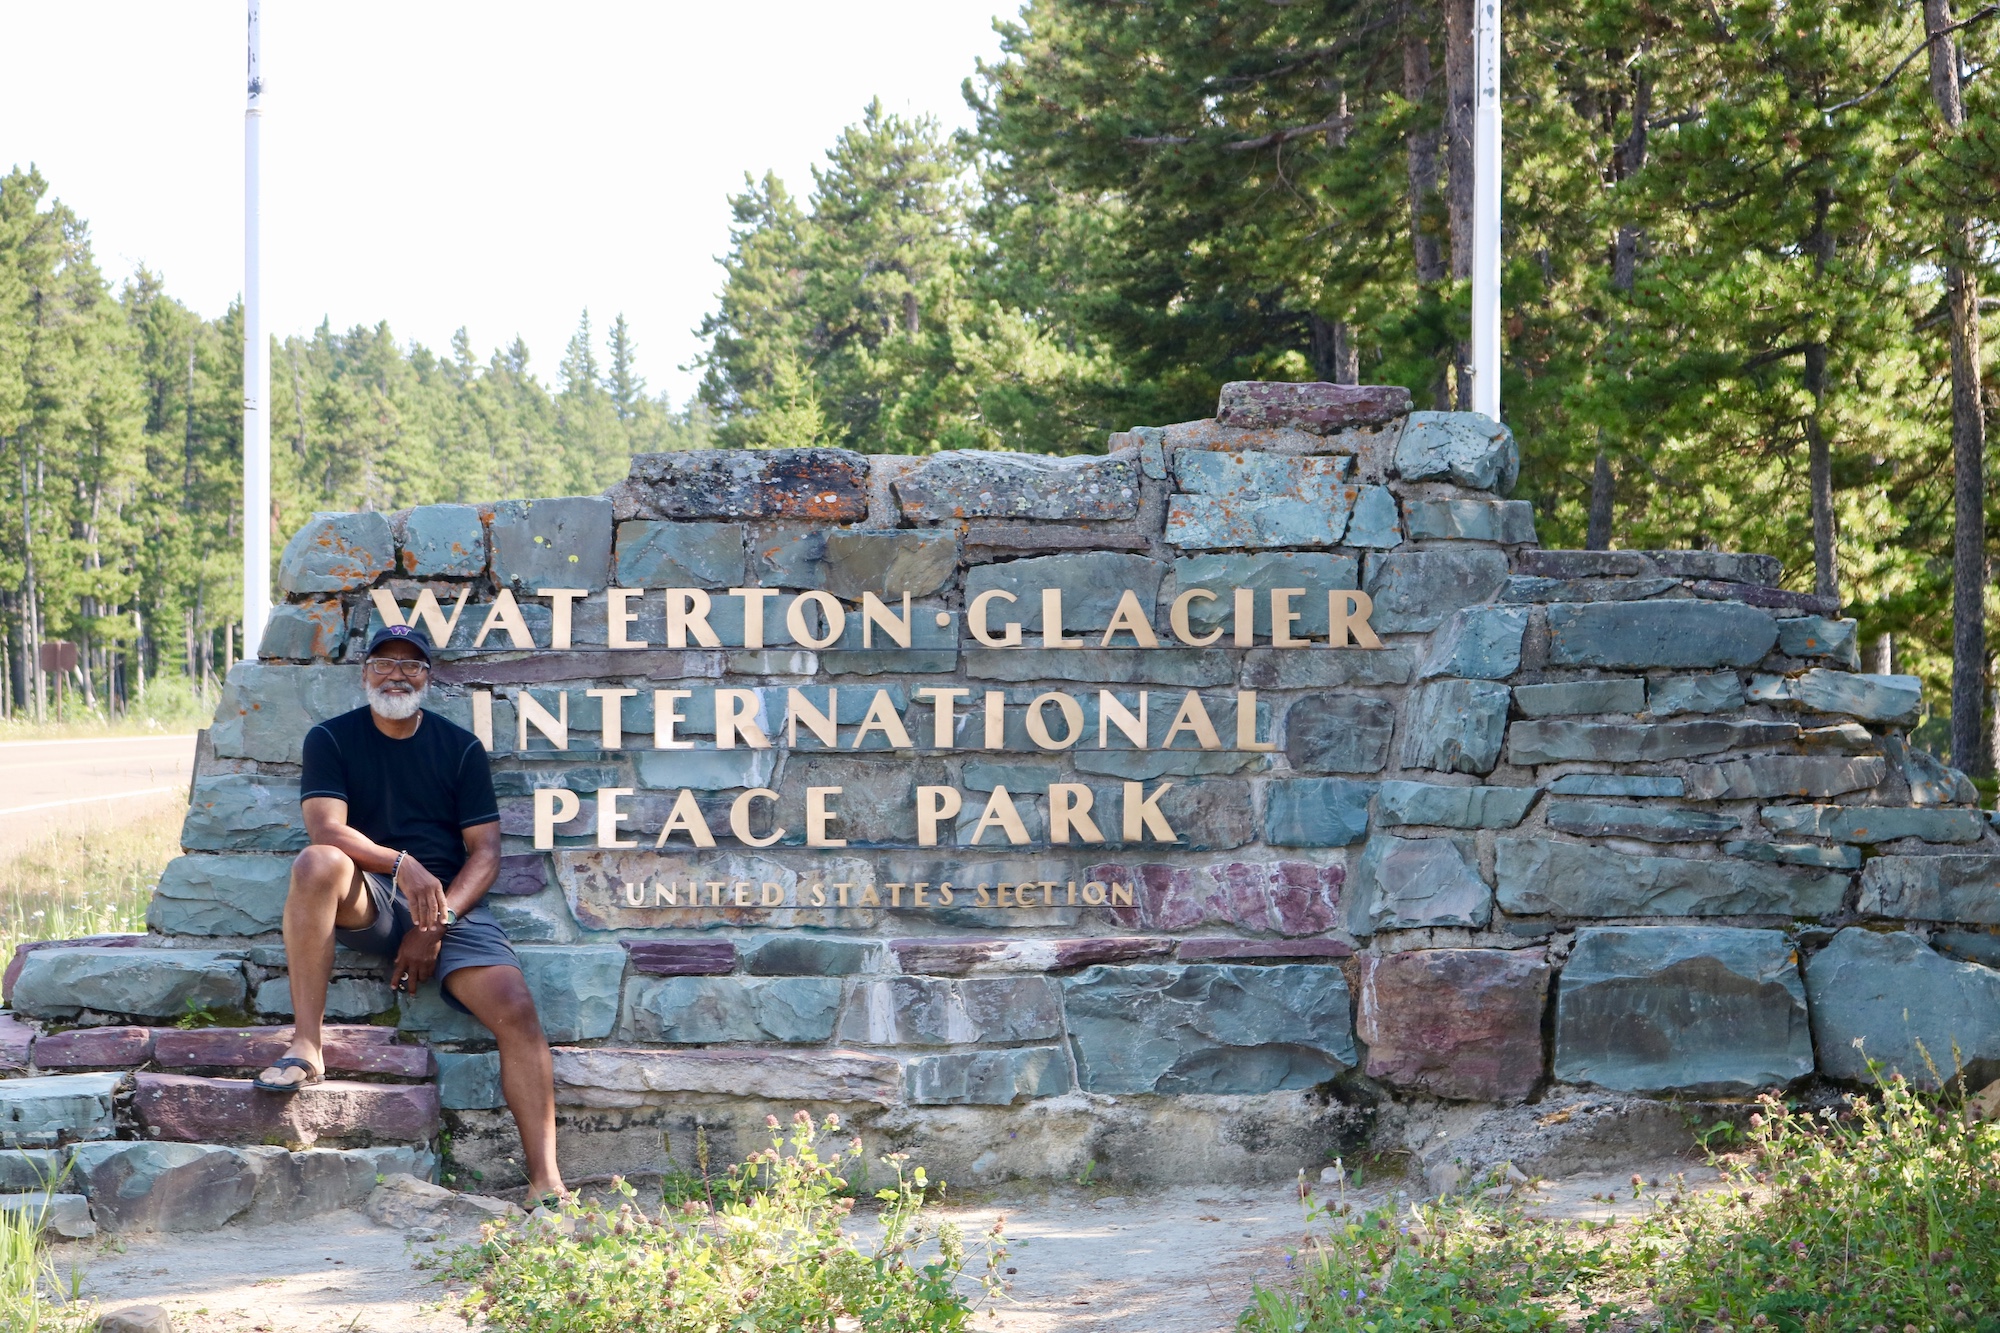 Carter McBride at the entrance sign to Waterton Glacier International Peace Park